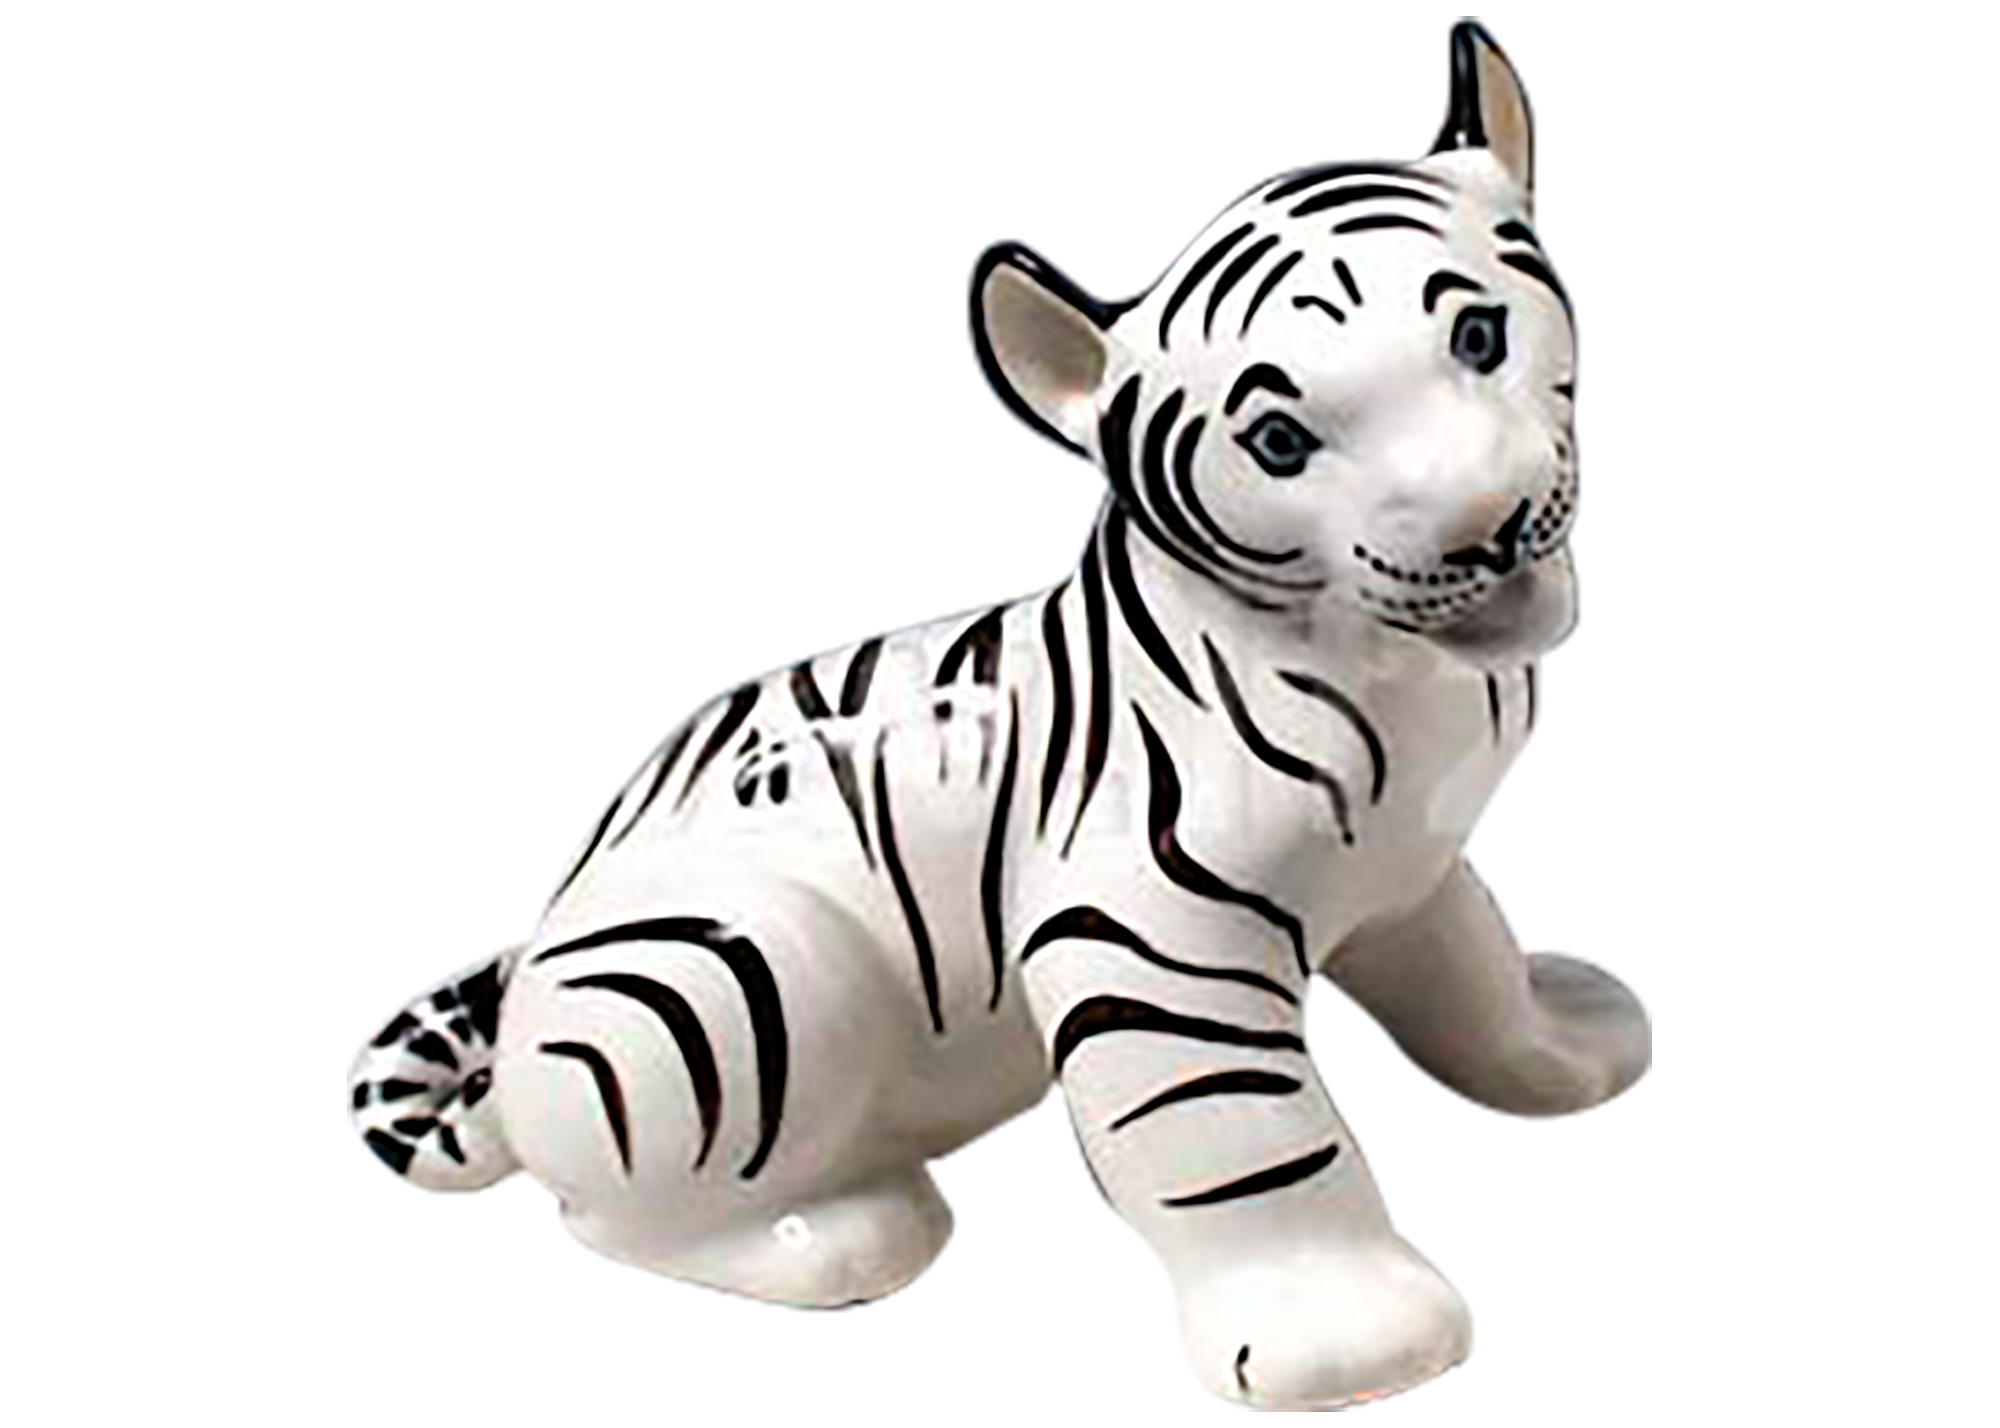 Buy White Tiger Cub Figurine at GoldenCockerel.com